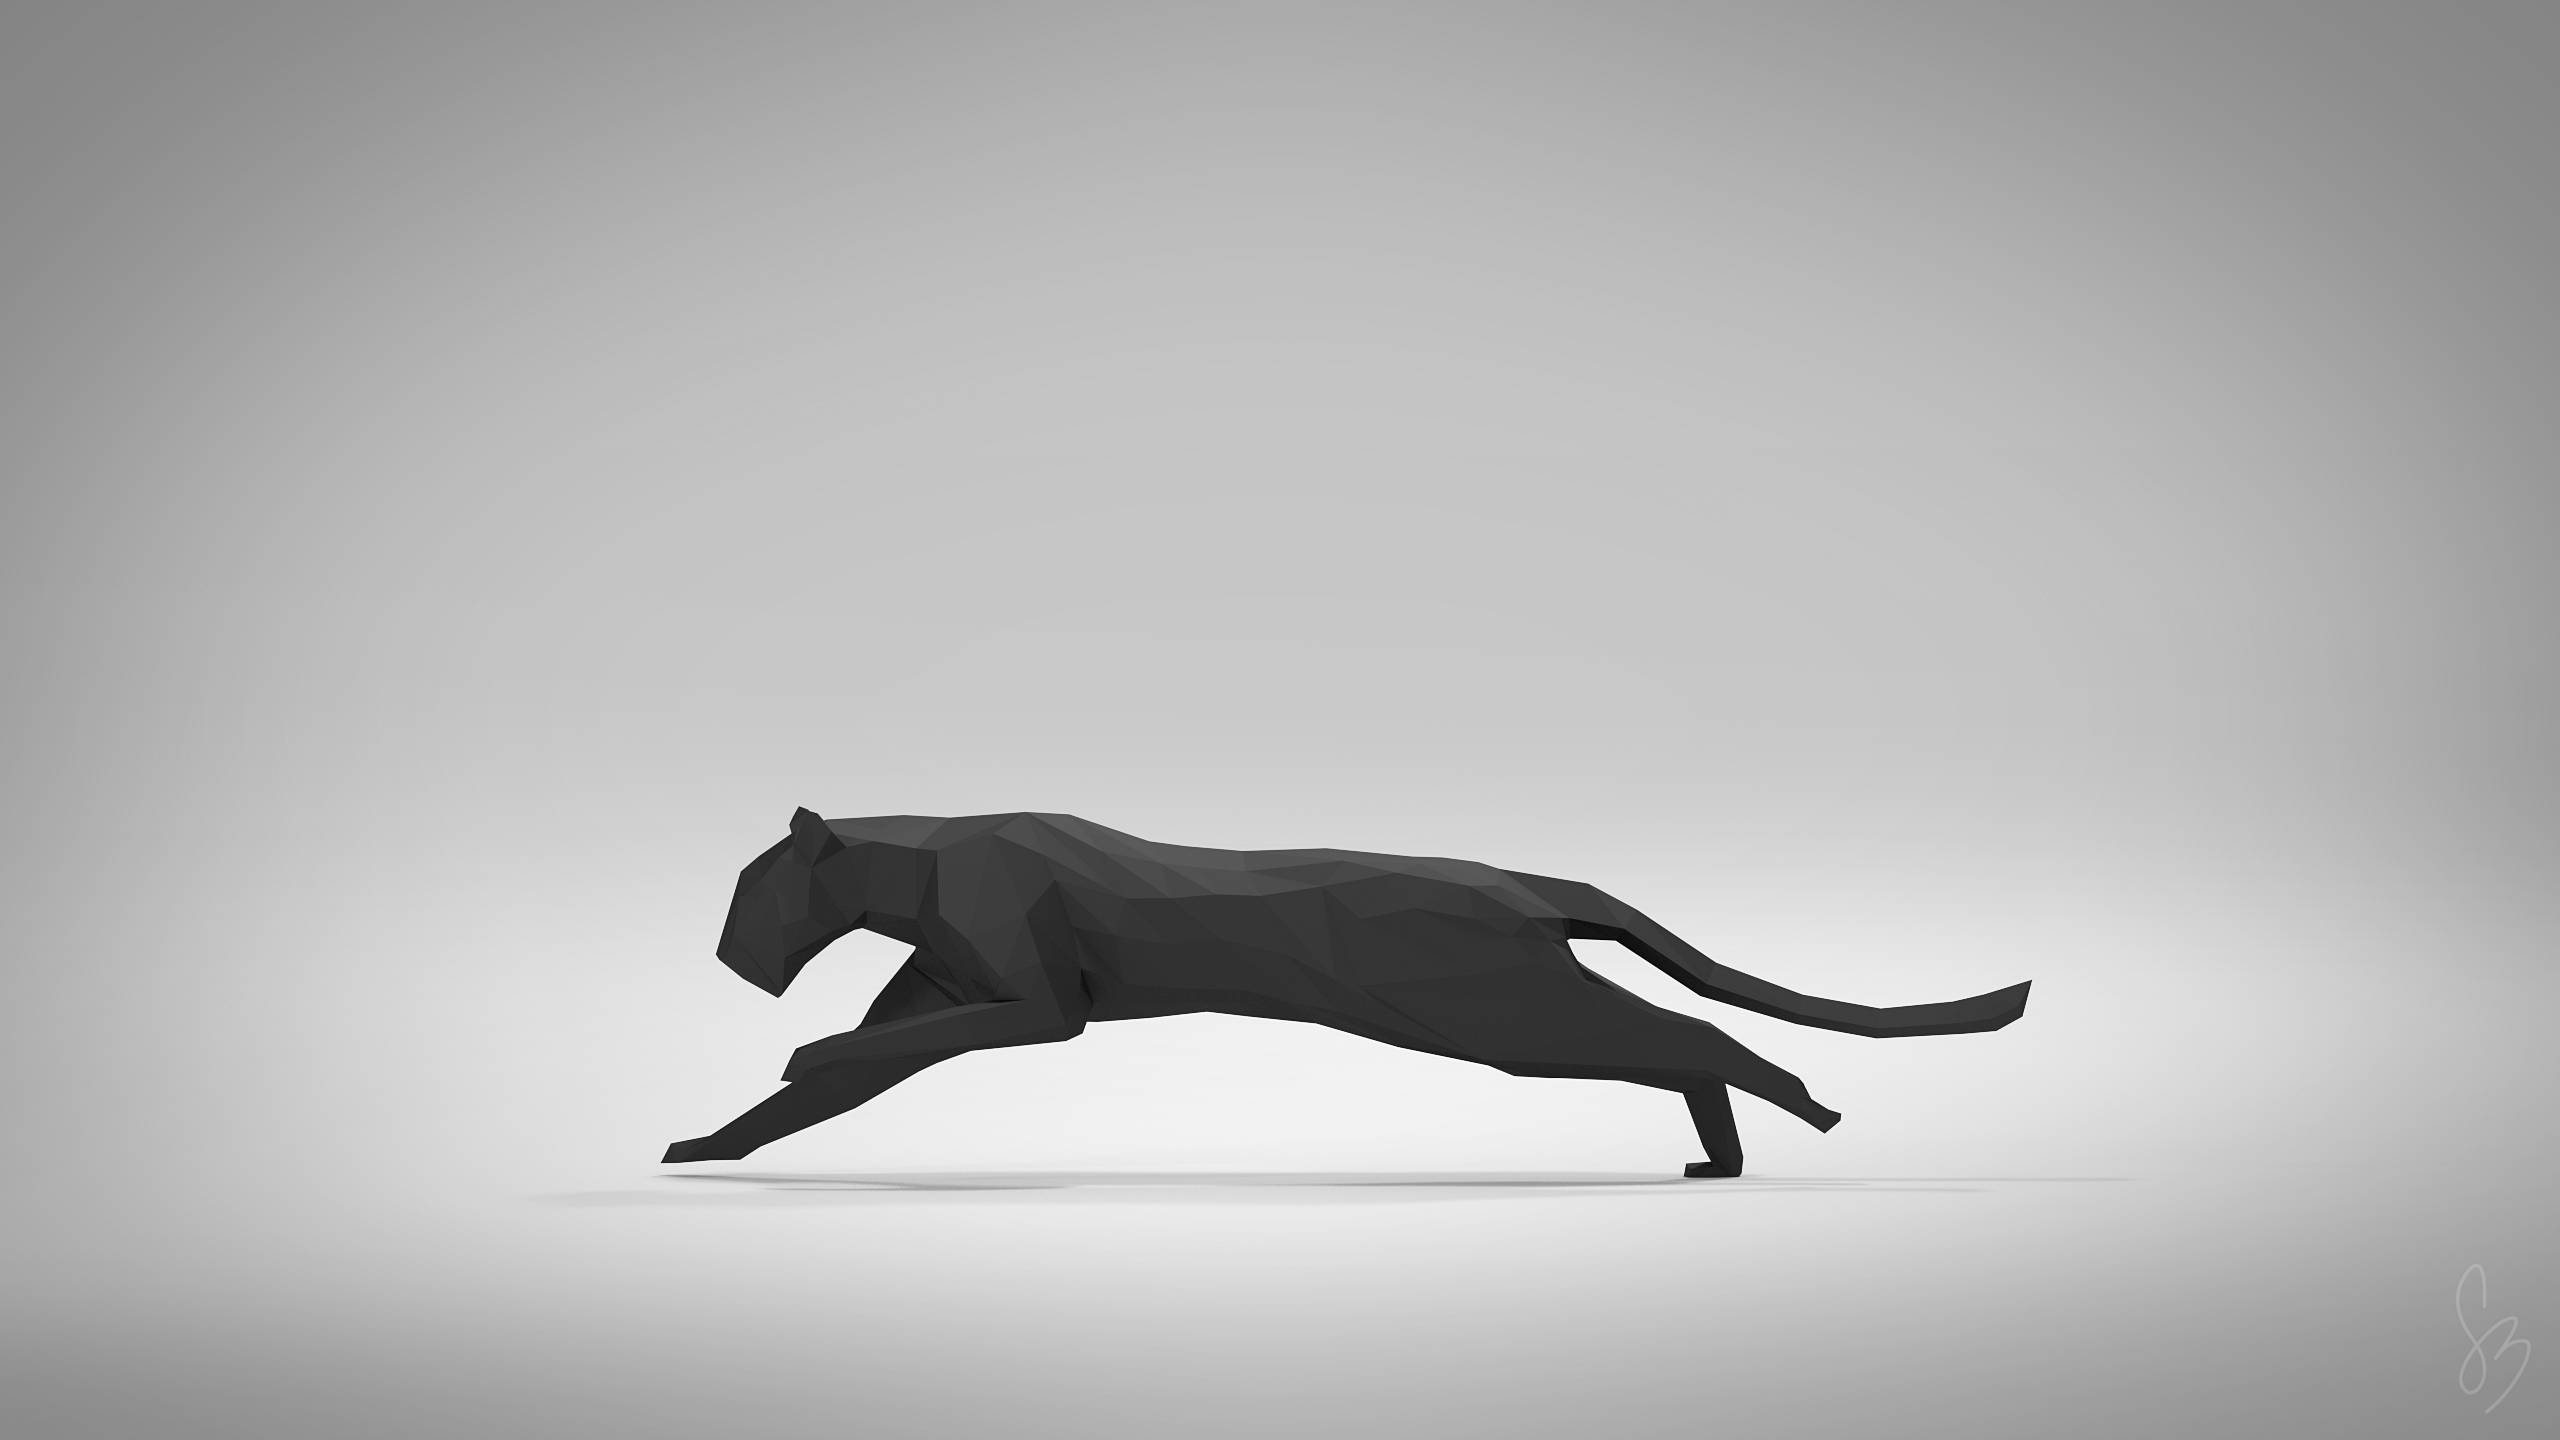 General 2560x1440 animals digital art pumas minimalism simple background running black vector artwork low poly gray